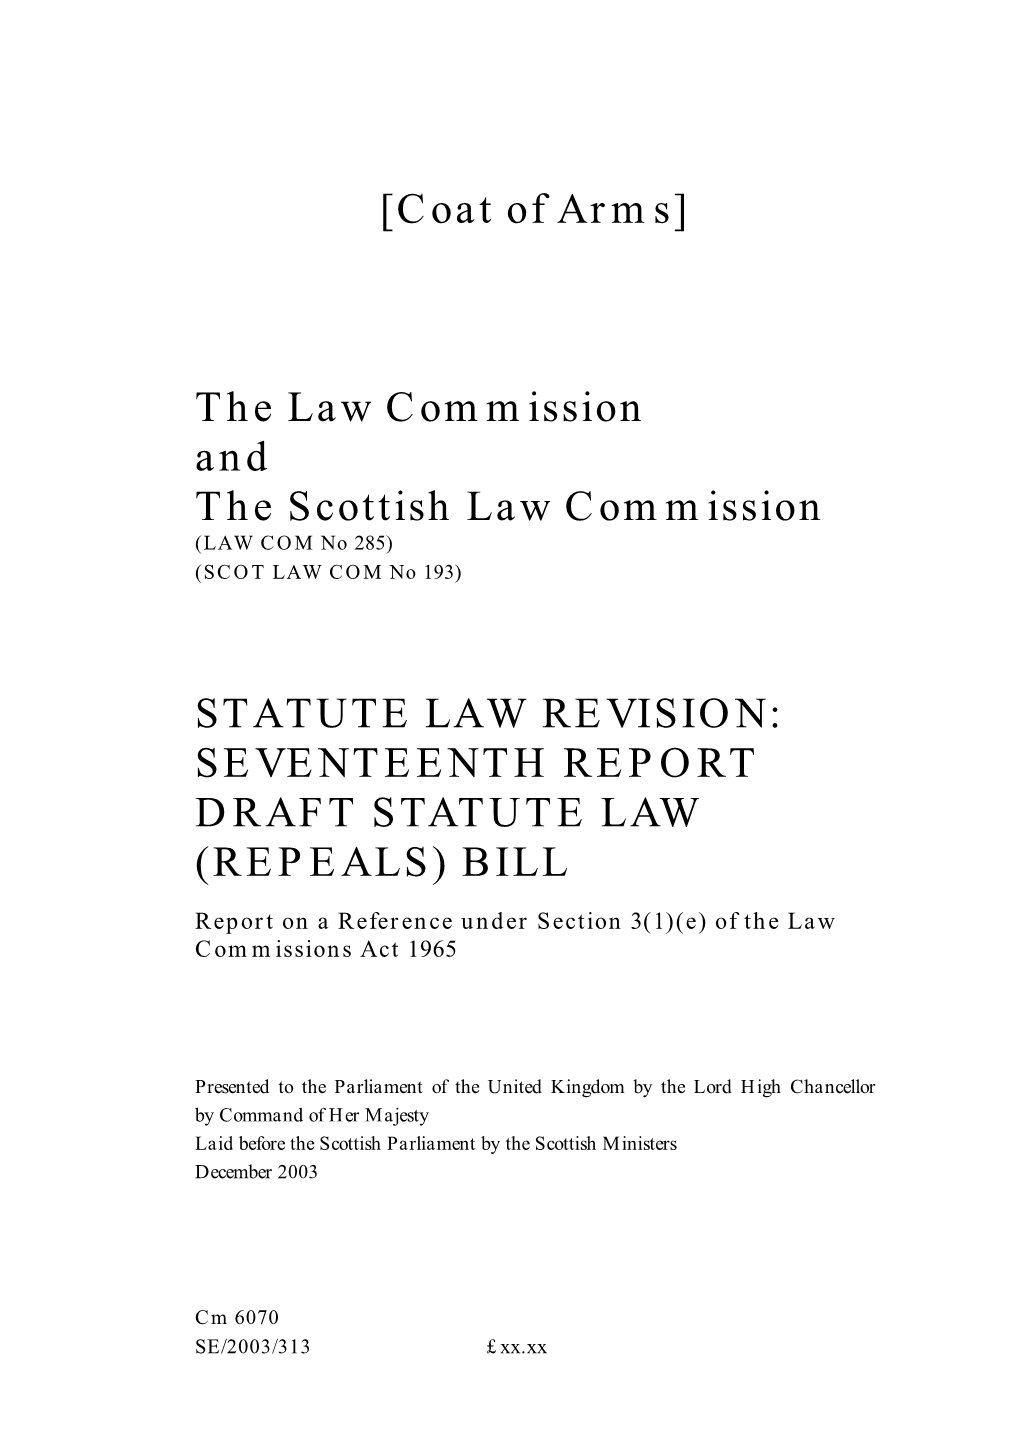 Statute Law Revision: Seventeenth Report Draft Statute Law (Repeals) Bill